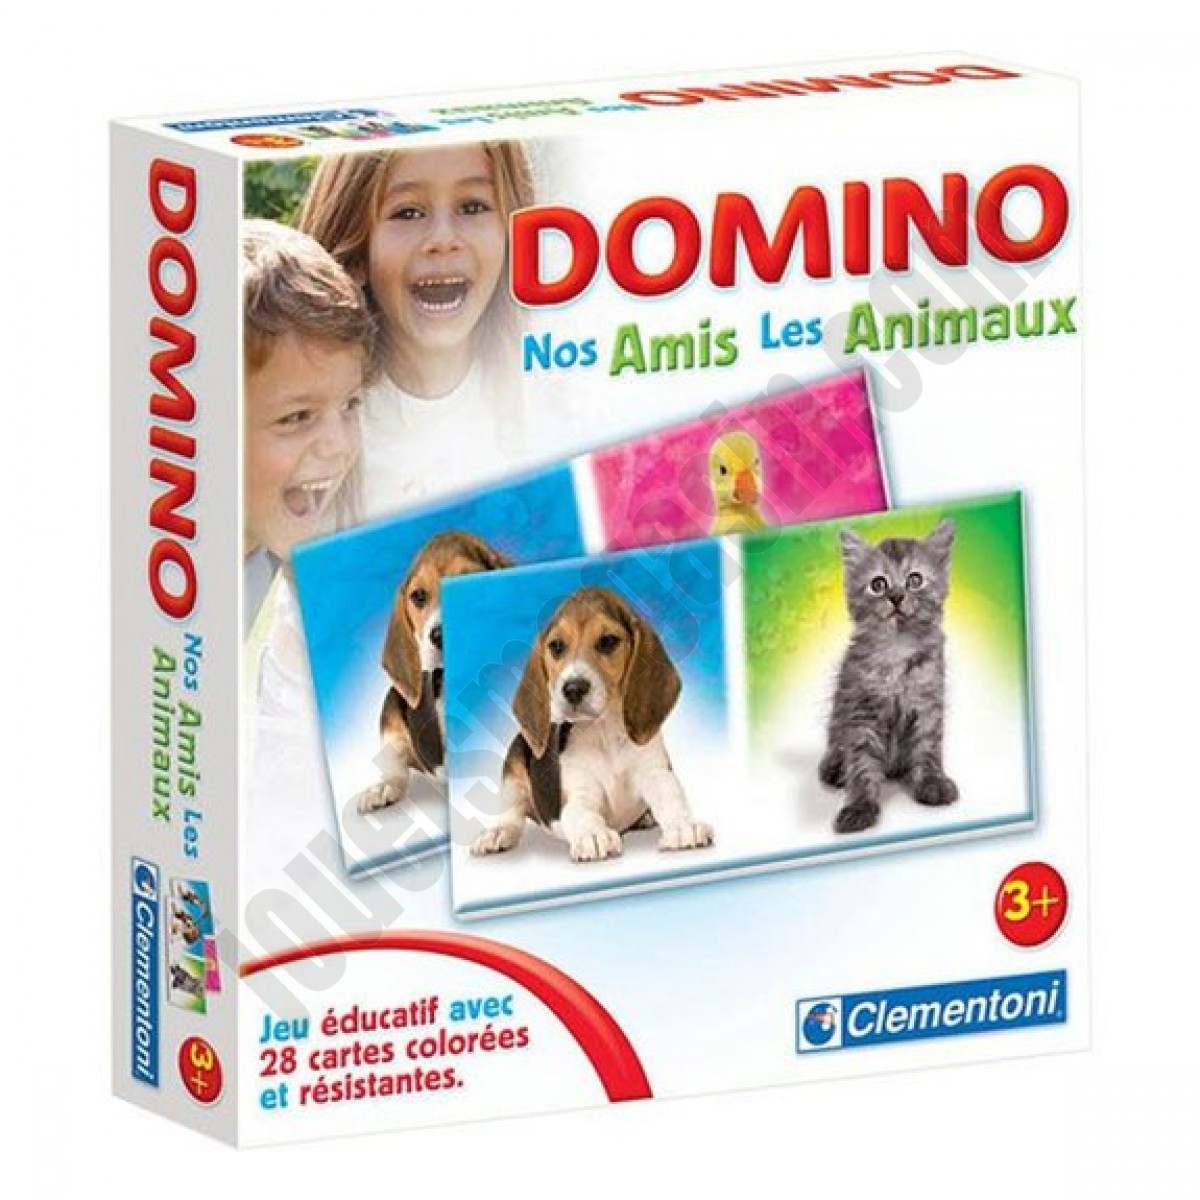 Domino Nos amis les animaux En promotion - Domino Nos amis les animaux En promotion